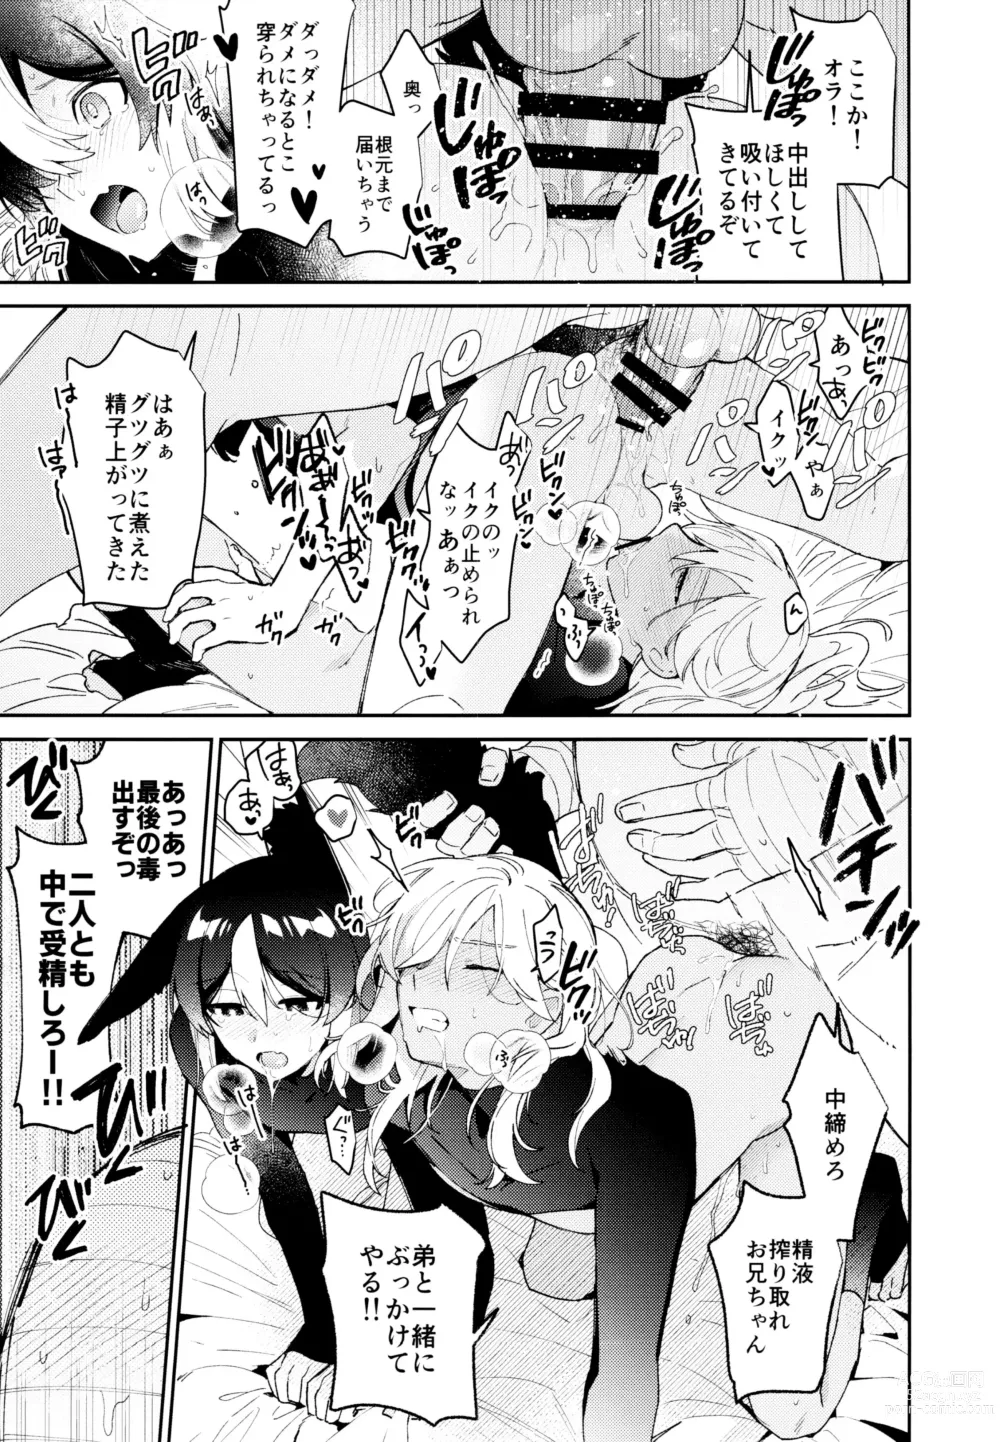 Page 53 of doujinshi ORE:CN